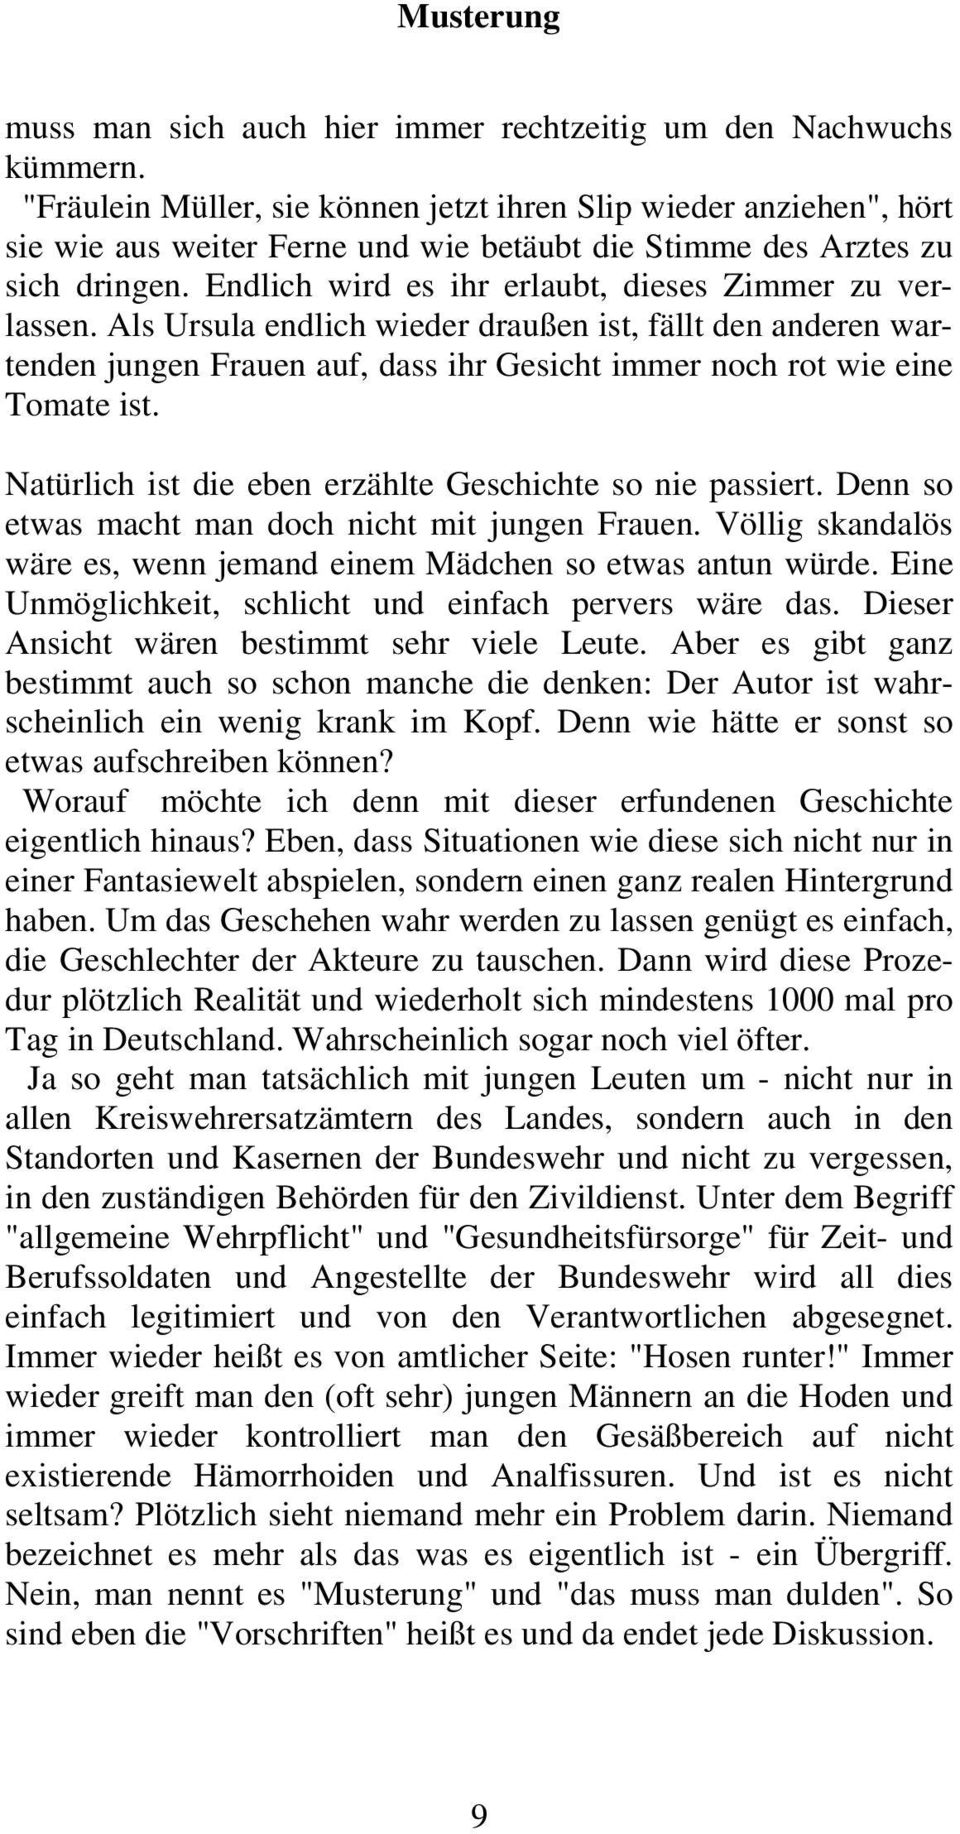 Bundeswehr hoden musterung Genitaluntersuchung bei